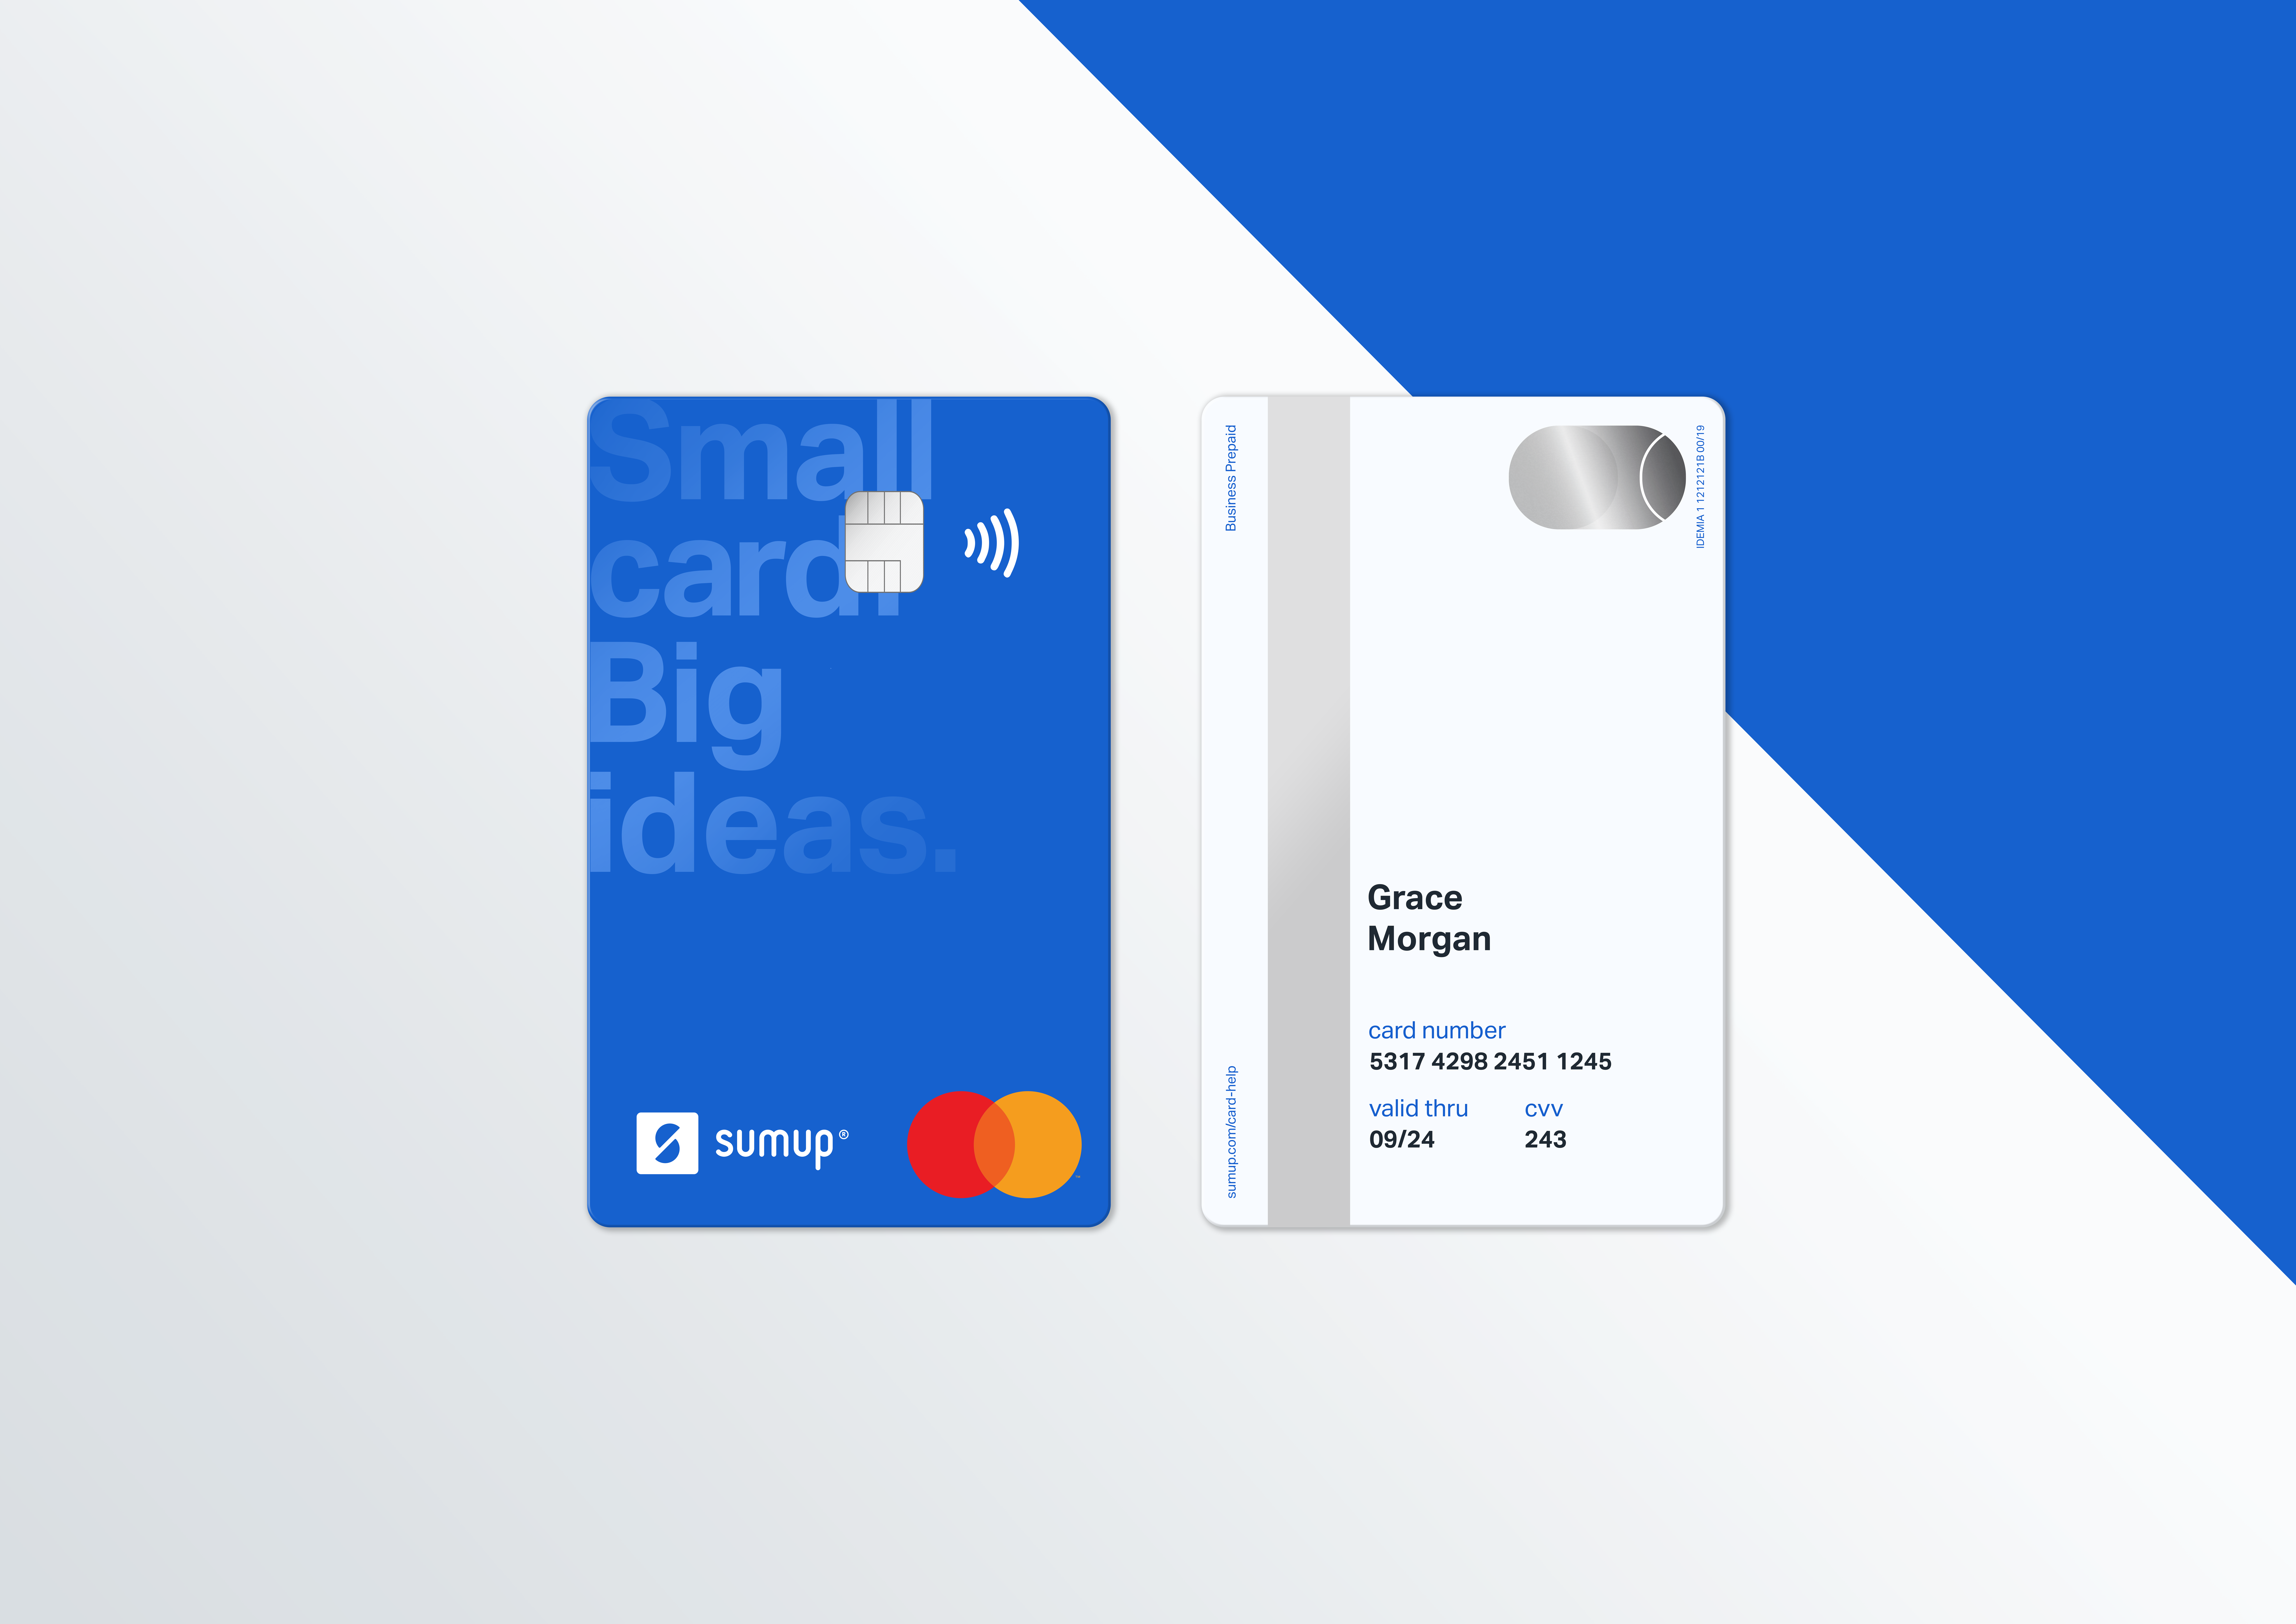 https://techcrunch.com/wp-content/uploads/2020/02/SumUp-Card-redesign-visualisation.png